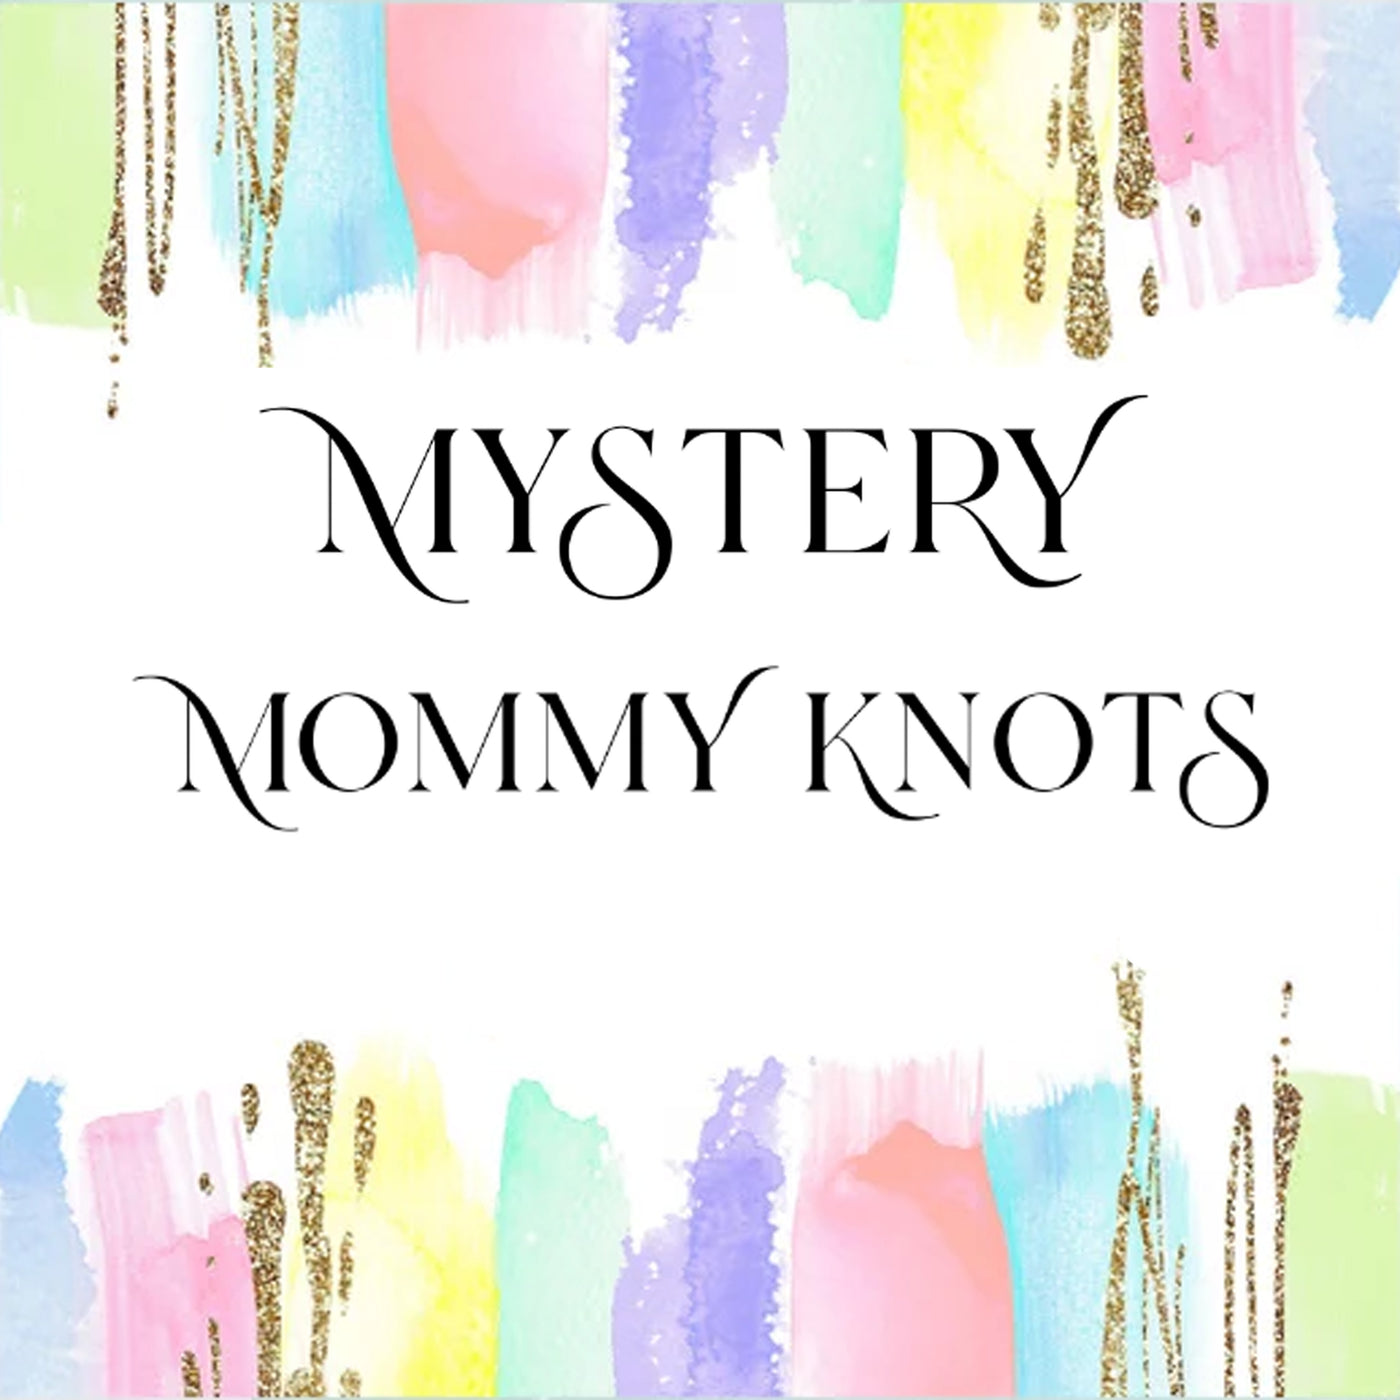 3 Mystery Mommy Knots